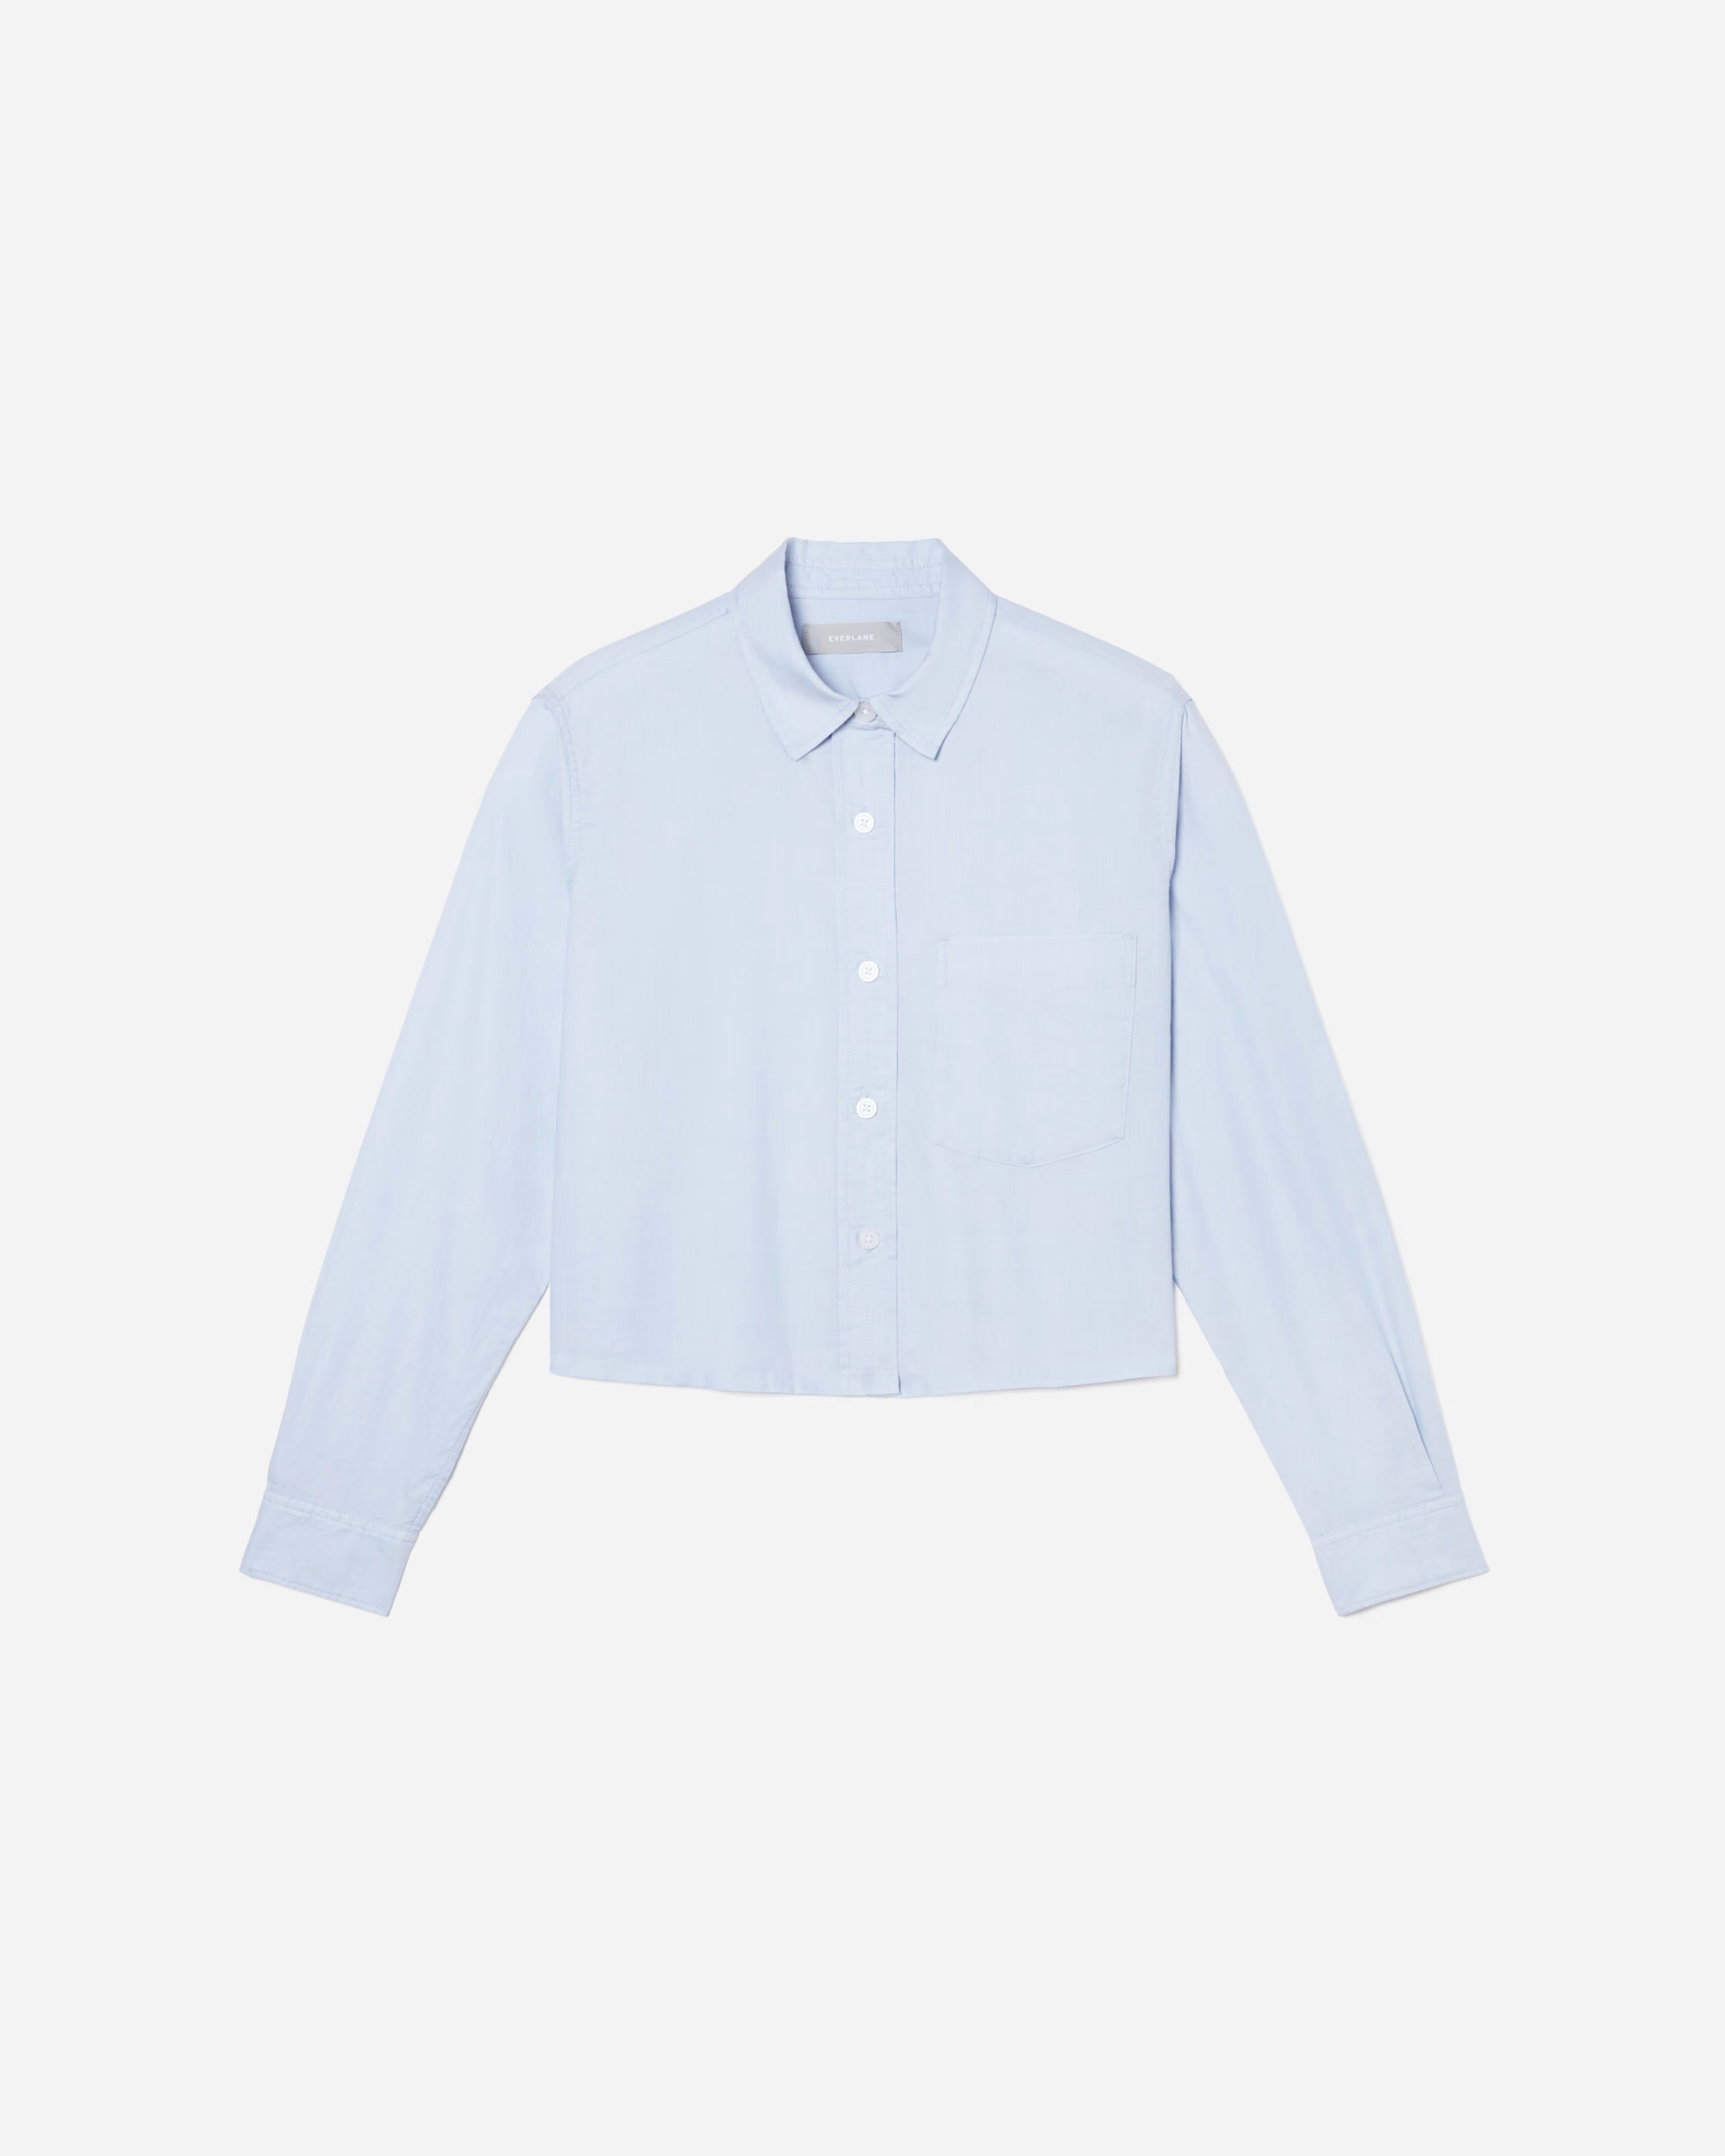 The Silky Cotton Way-Short Shirt | Everlane